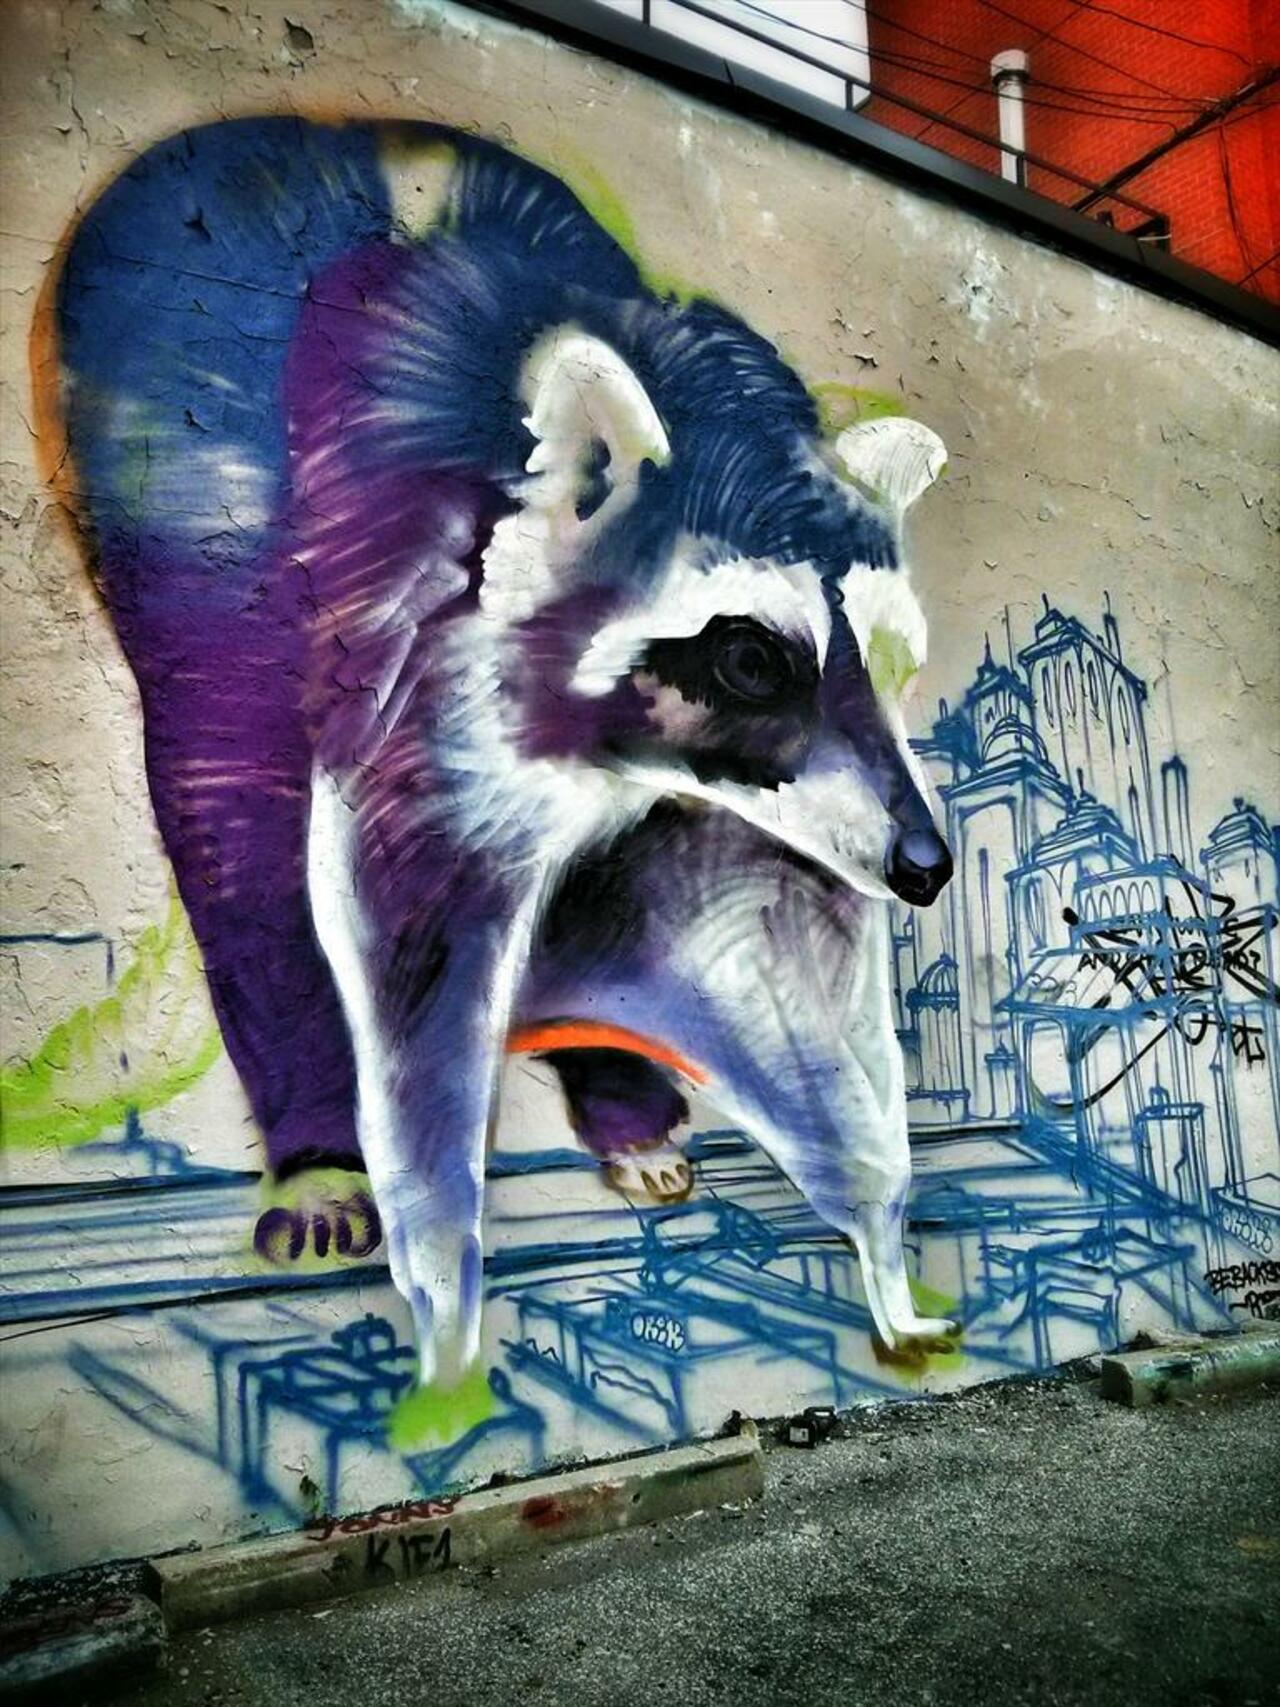 WIP by Poser, Portland Street, Toronto.
#graffiti #streetart #urbanart http://t.co/DC4jD5sFCL